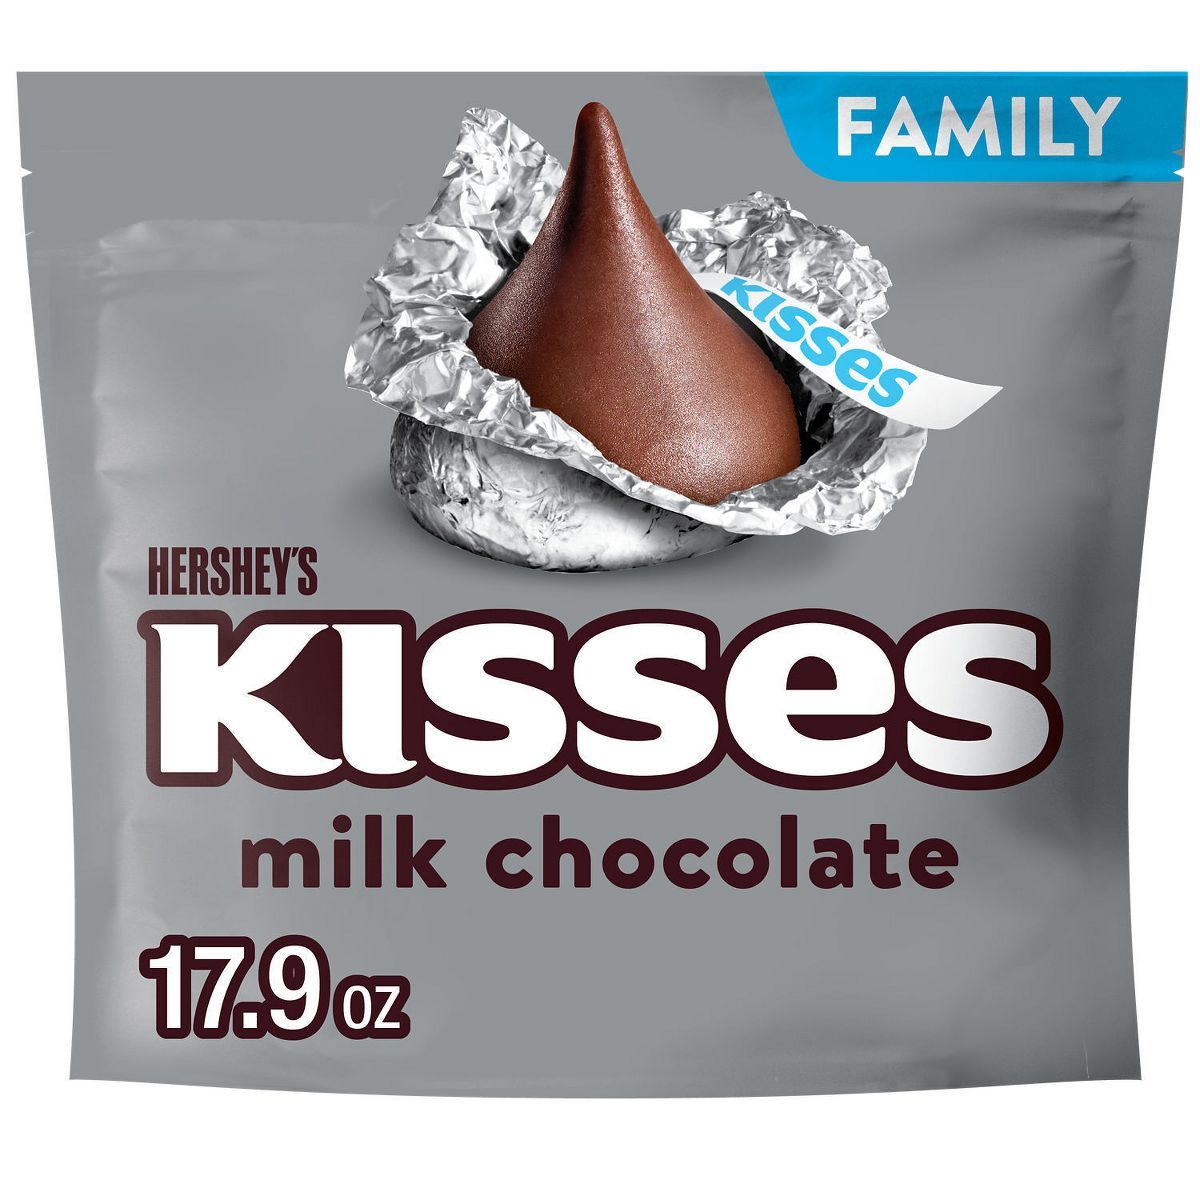 Hershey's Kisses Milk Chocolate Candy - 17.9oz | Target